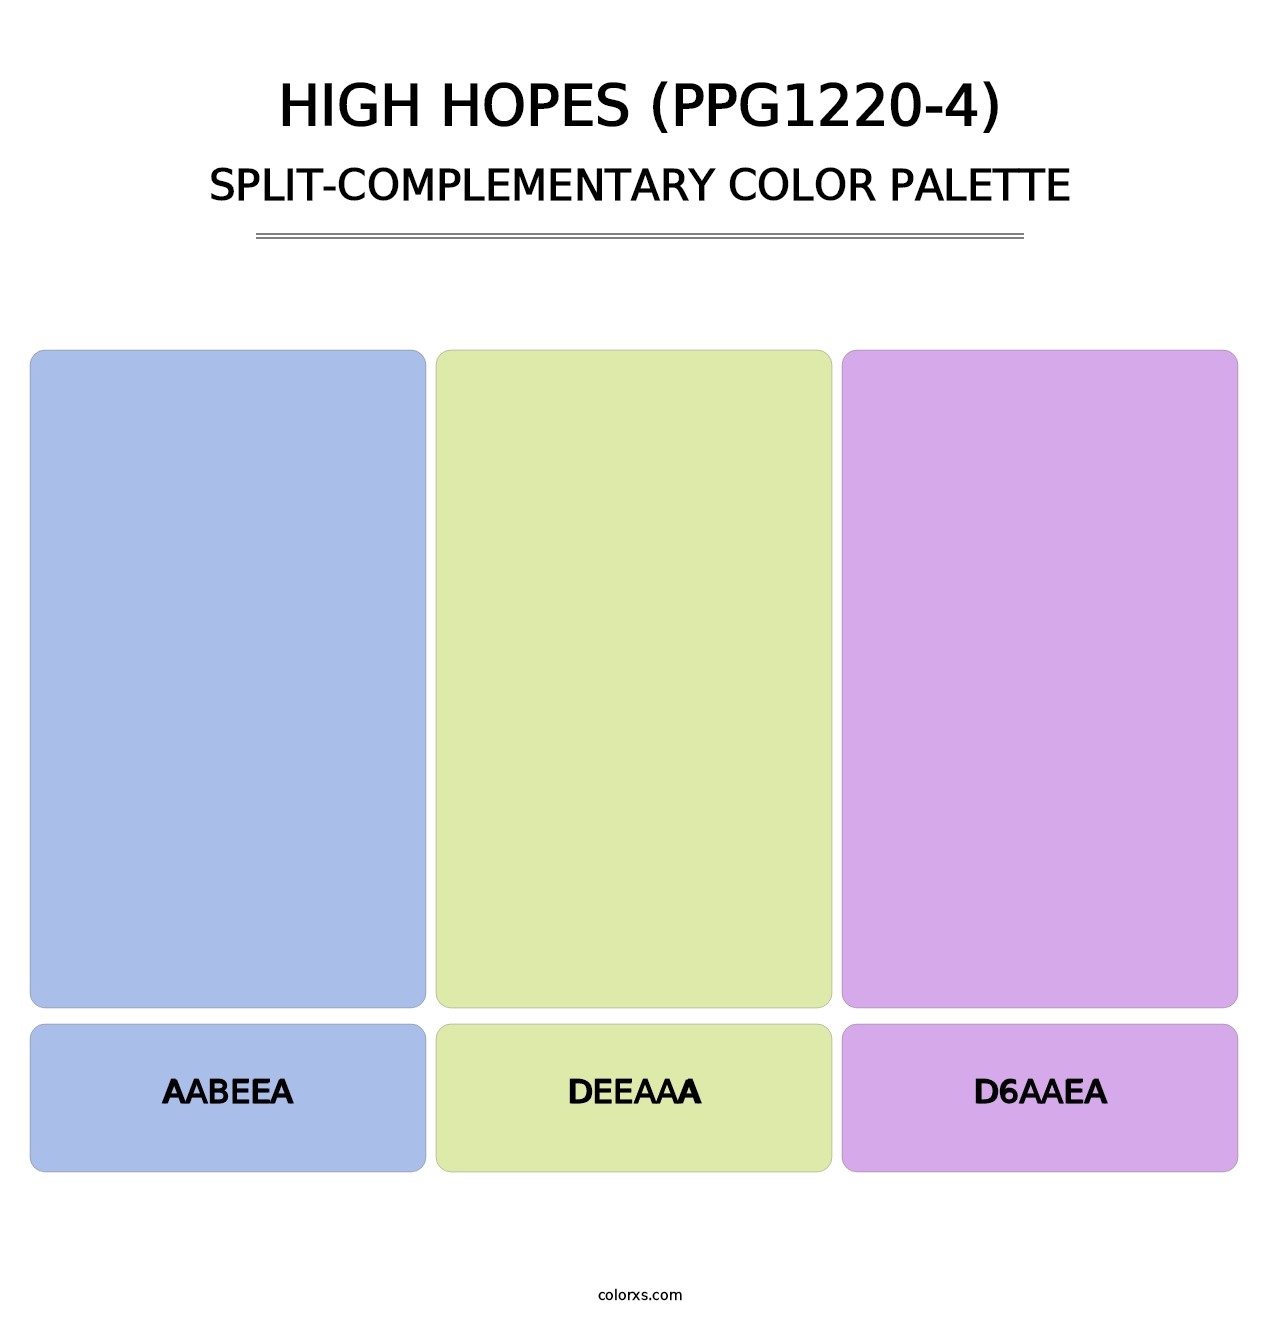 High Hopes (PPG1220-4) - Split-Complementary Color Palette